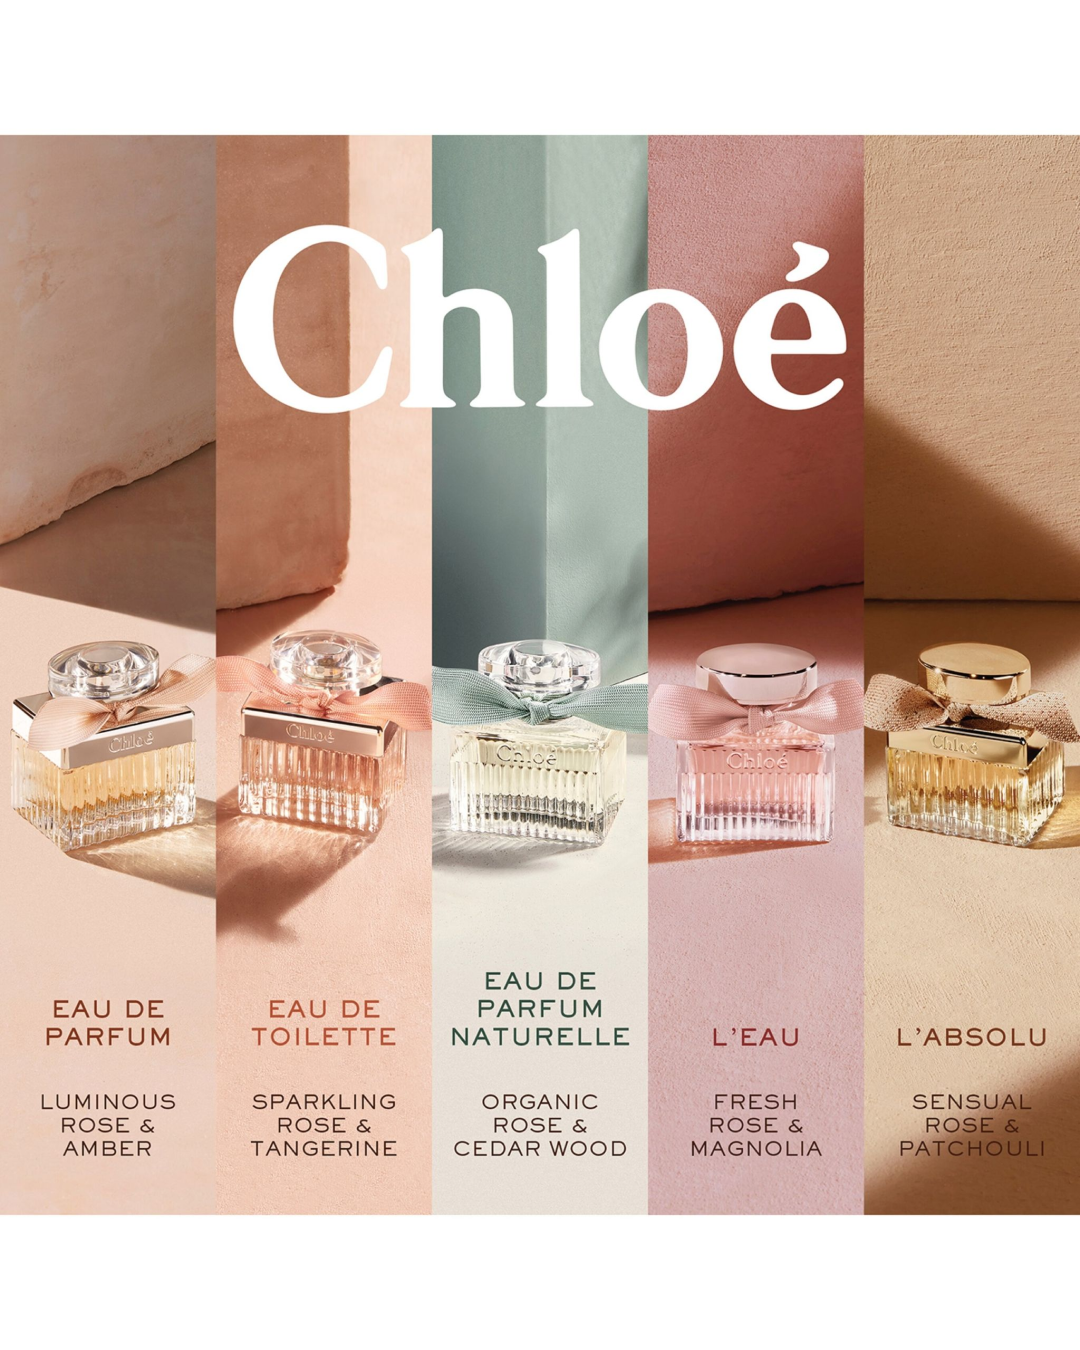 Chloe Chloe Eau de Parfum Travel Vial (1.2ml) - Best Buy World Philippines